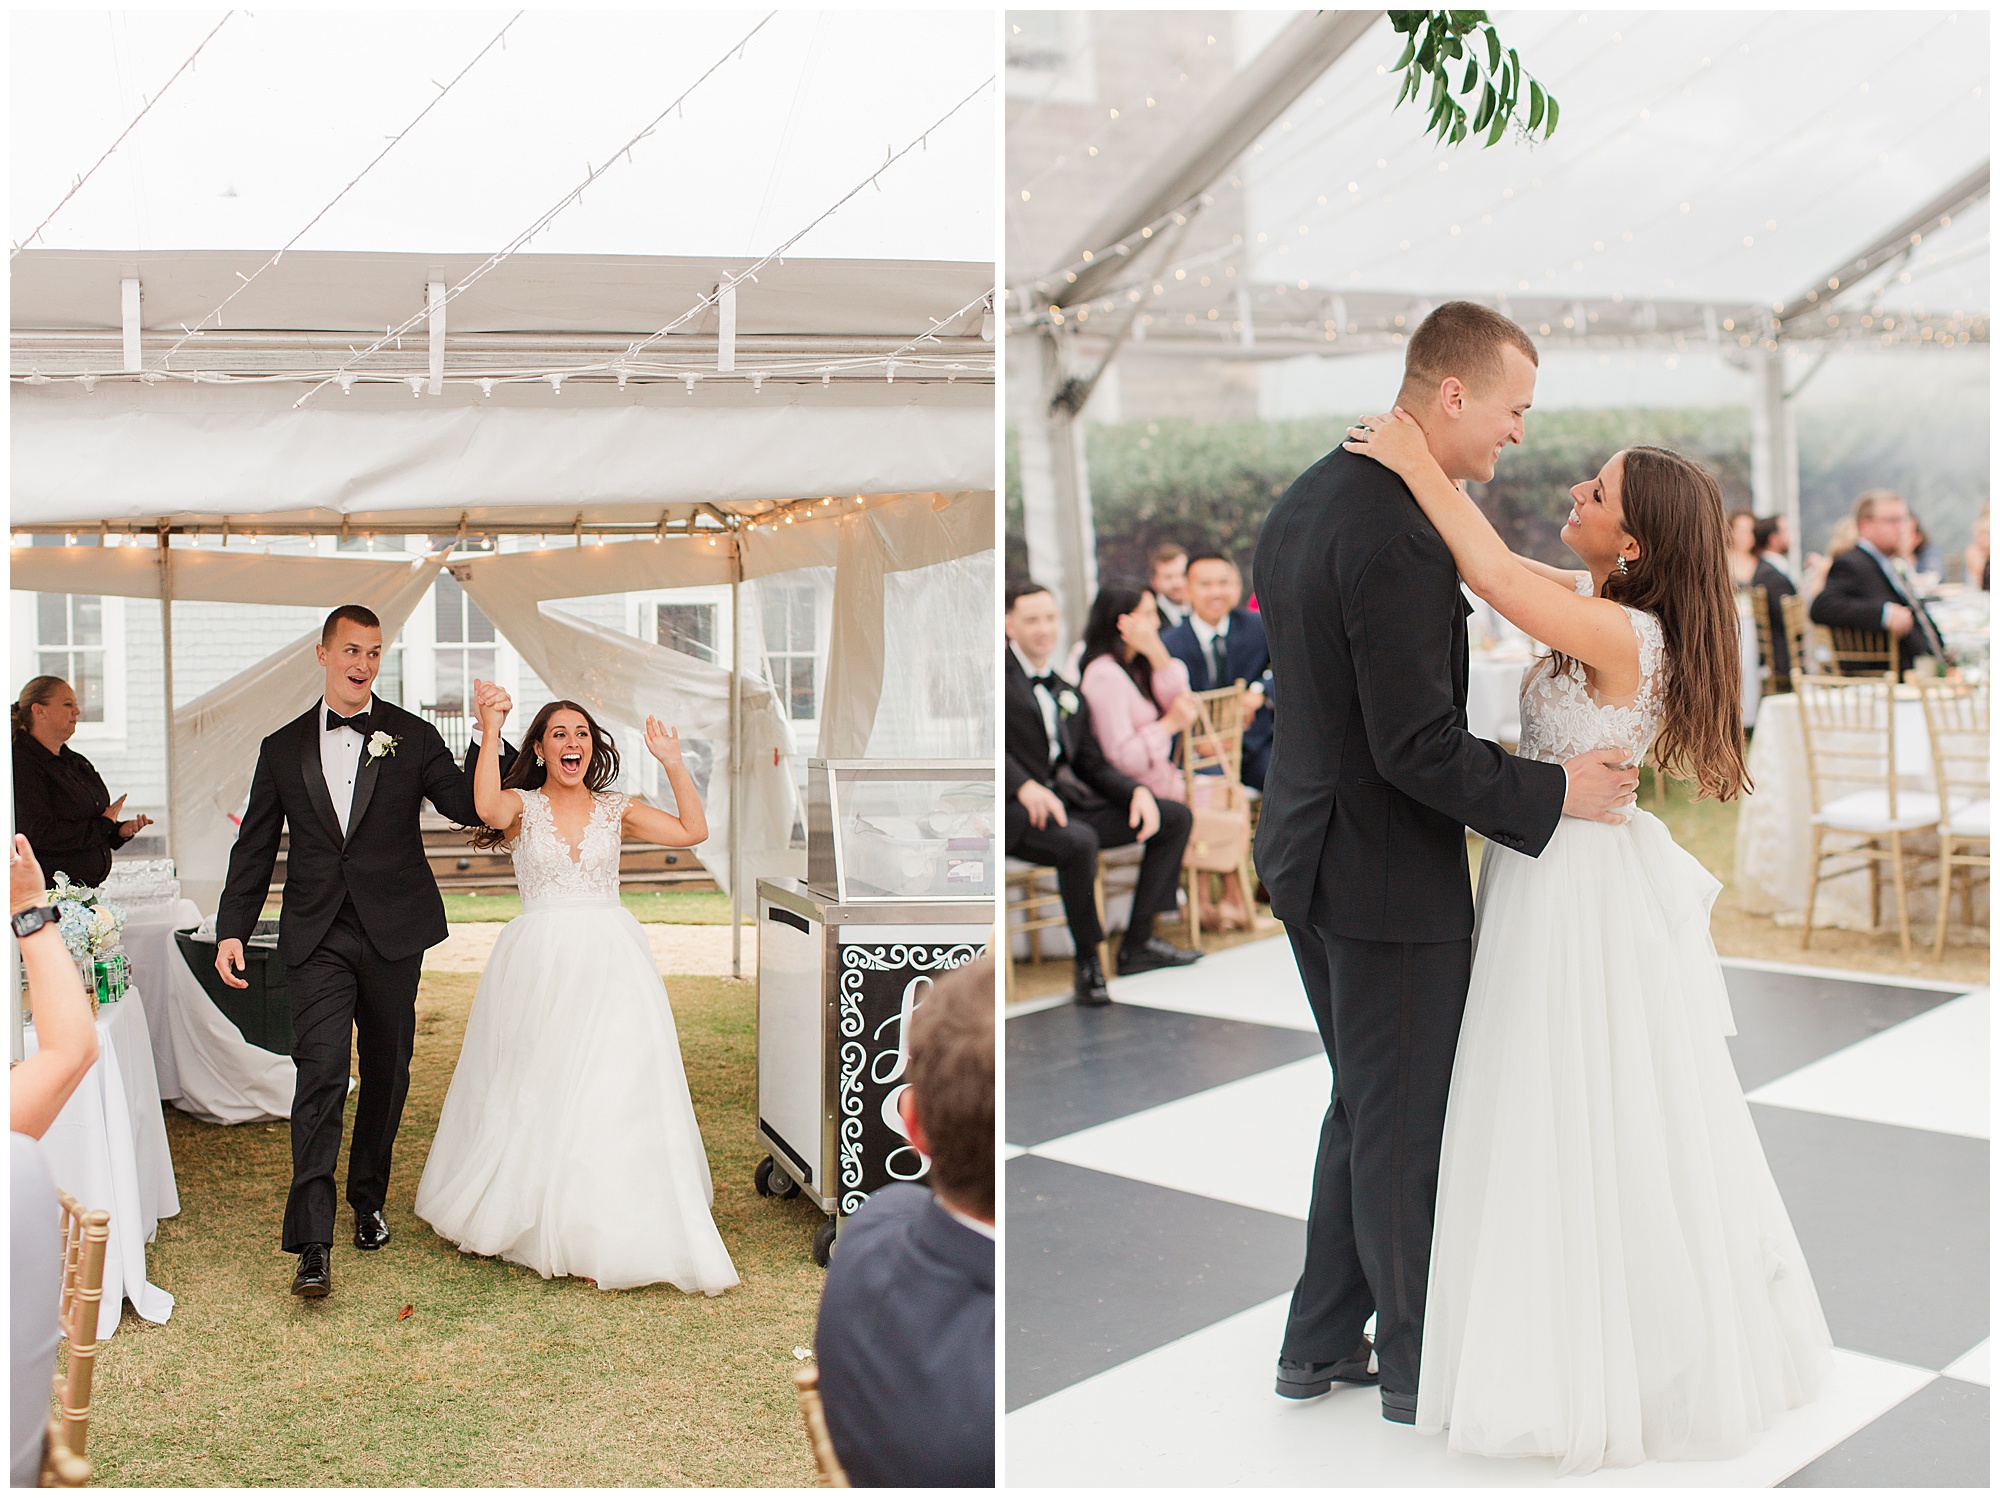 Danielle & Chris, East Beach Bay Front Club wedding, Hampton Roads weddings, Kelley Stinson Photography, first dance, tent wedding